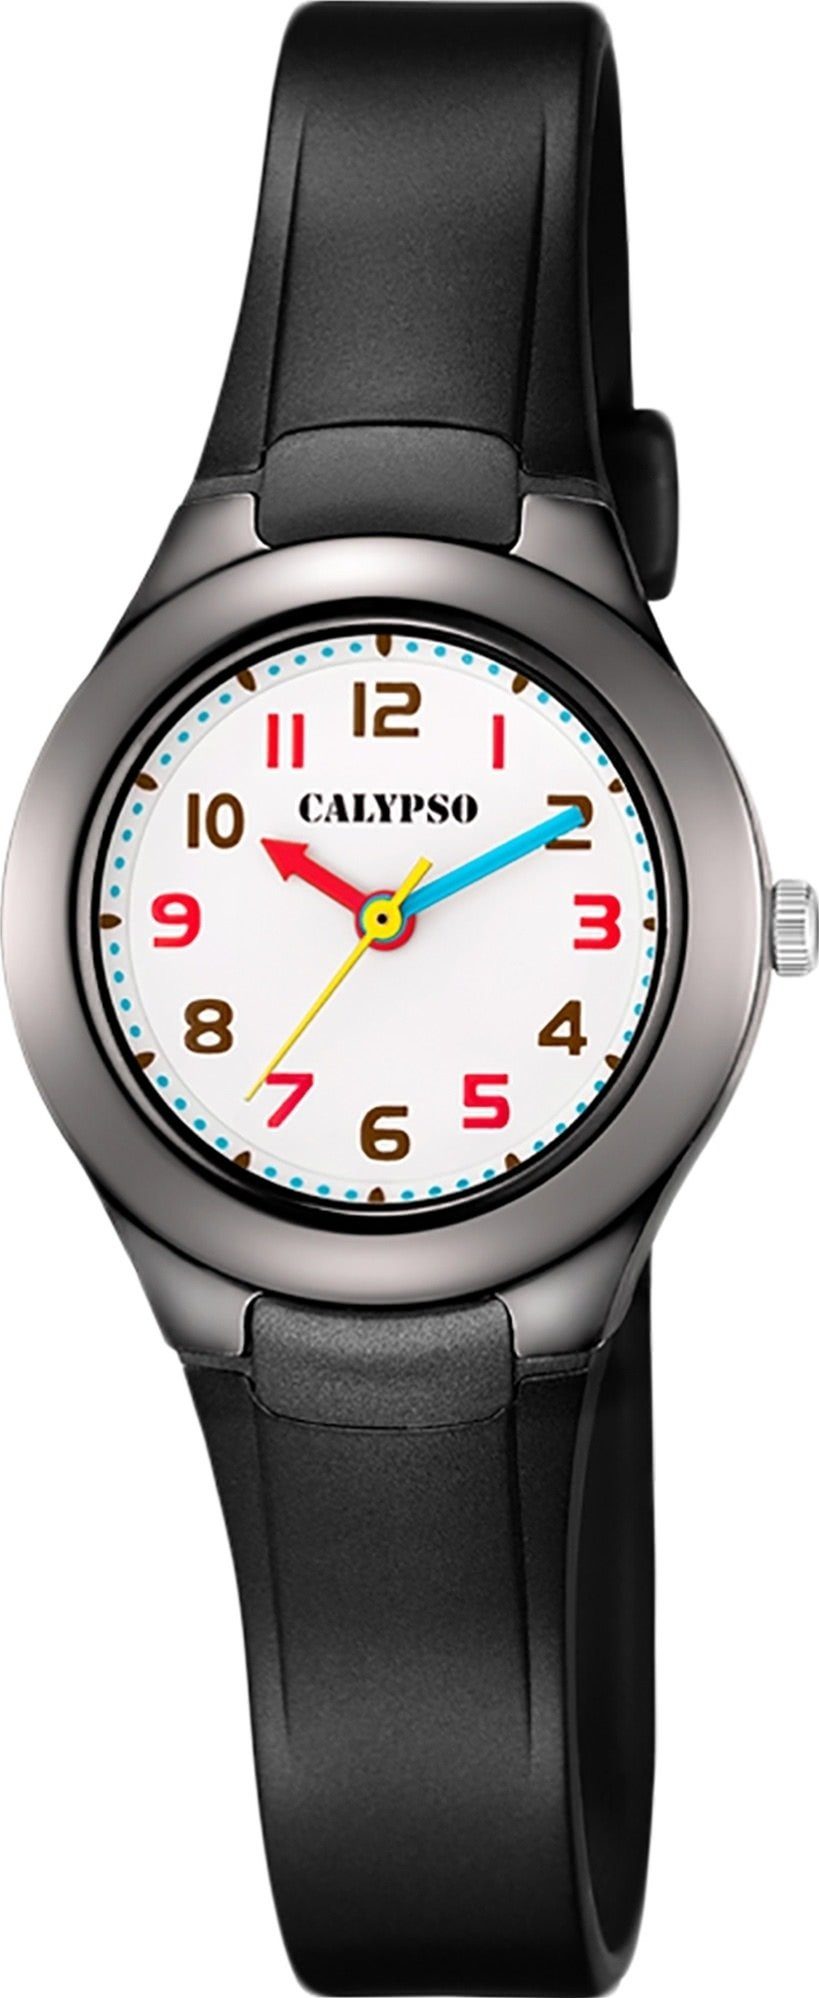 CALYPSO WATCHES rund, Kinder schwarz, Calypso PU, Kunststoff, Fashion K5749/8 Kunststoff Armbanduhr PUarmband Uhr Quarzuhr Kinder